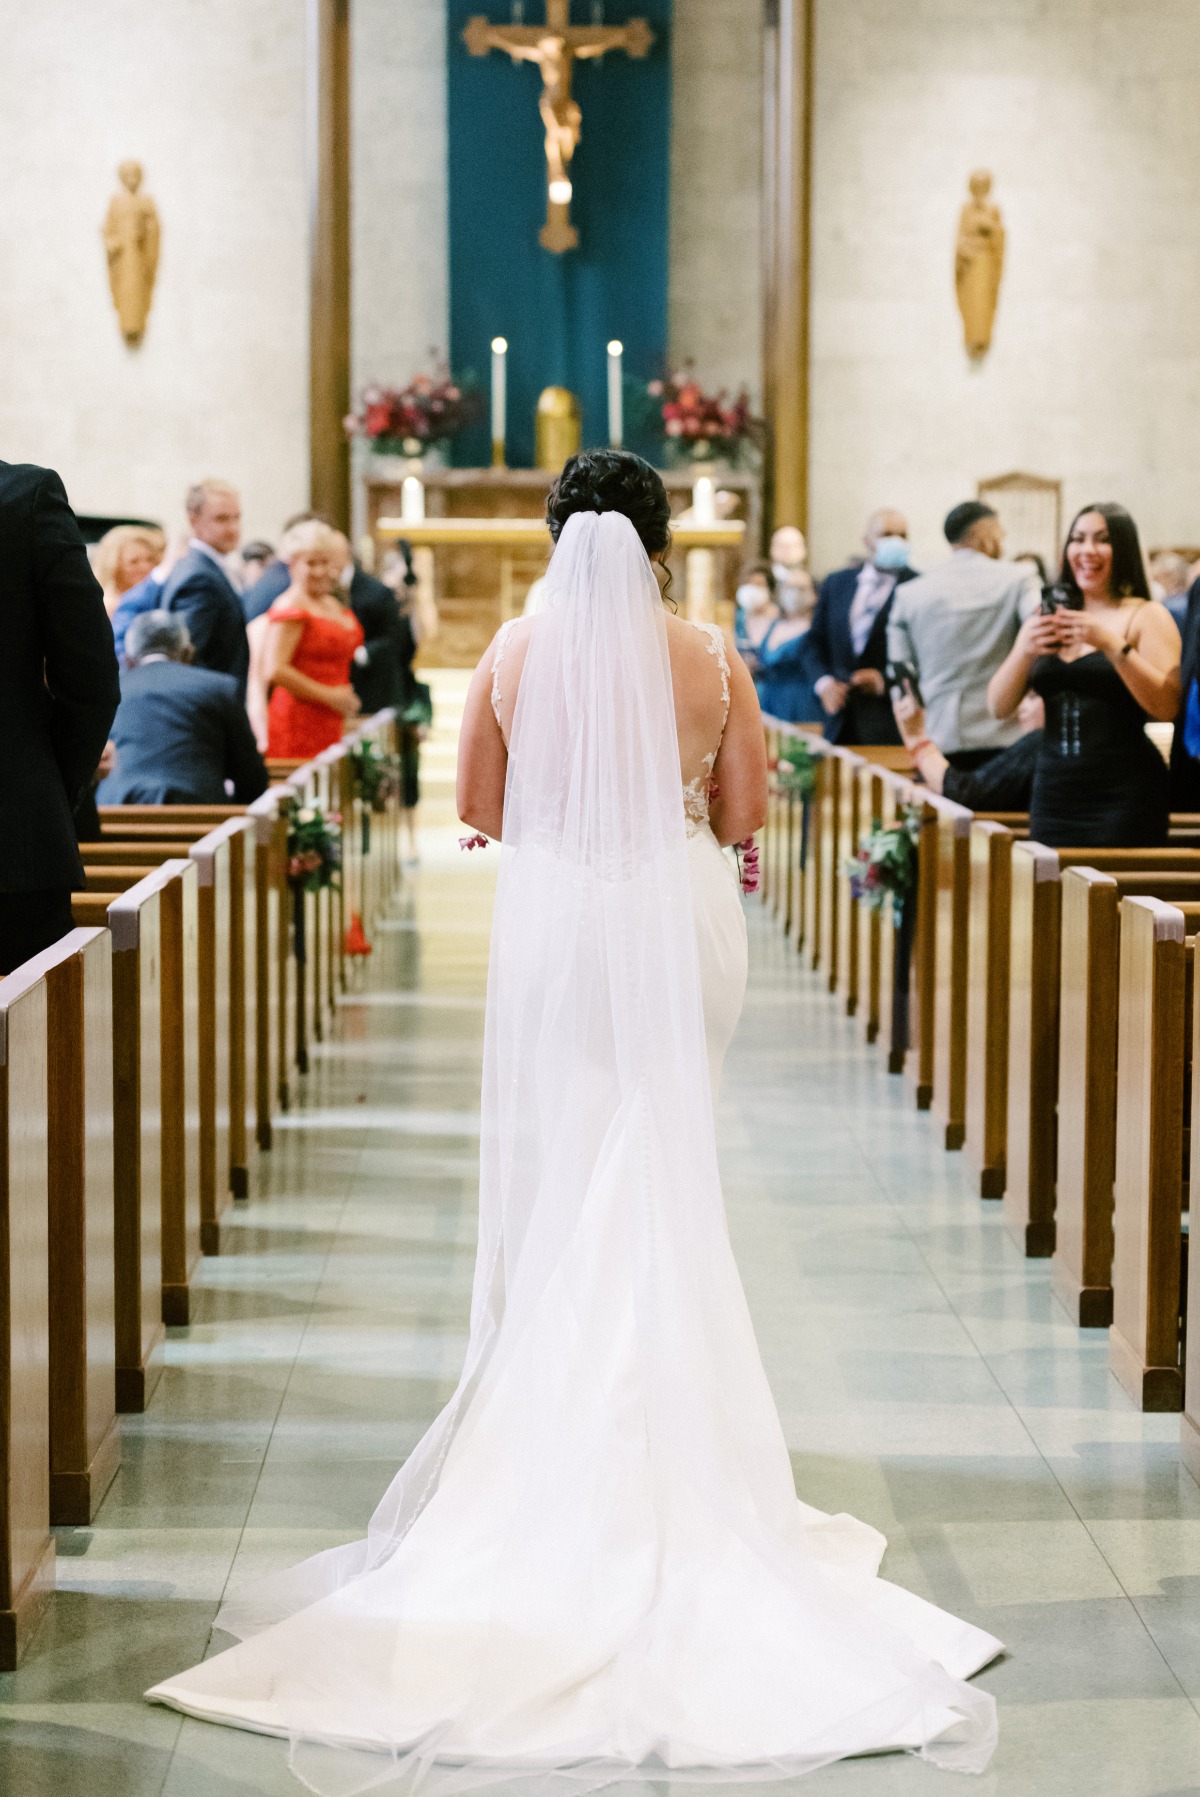 Bride walking down aisle